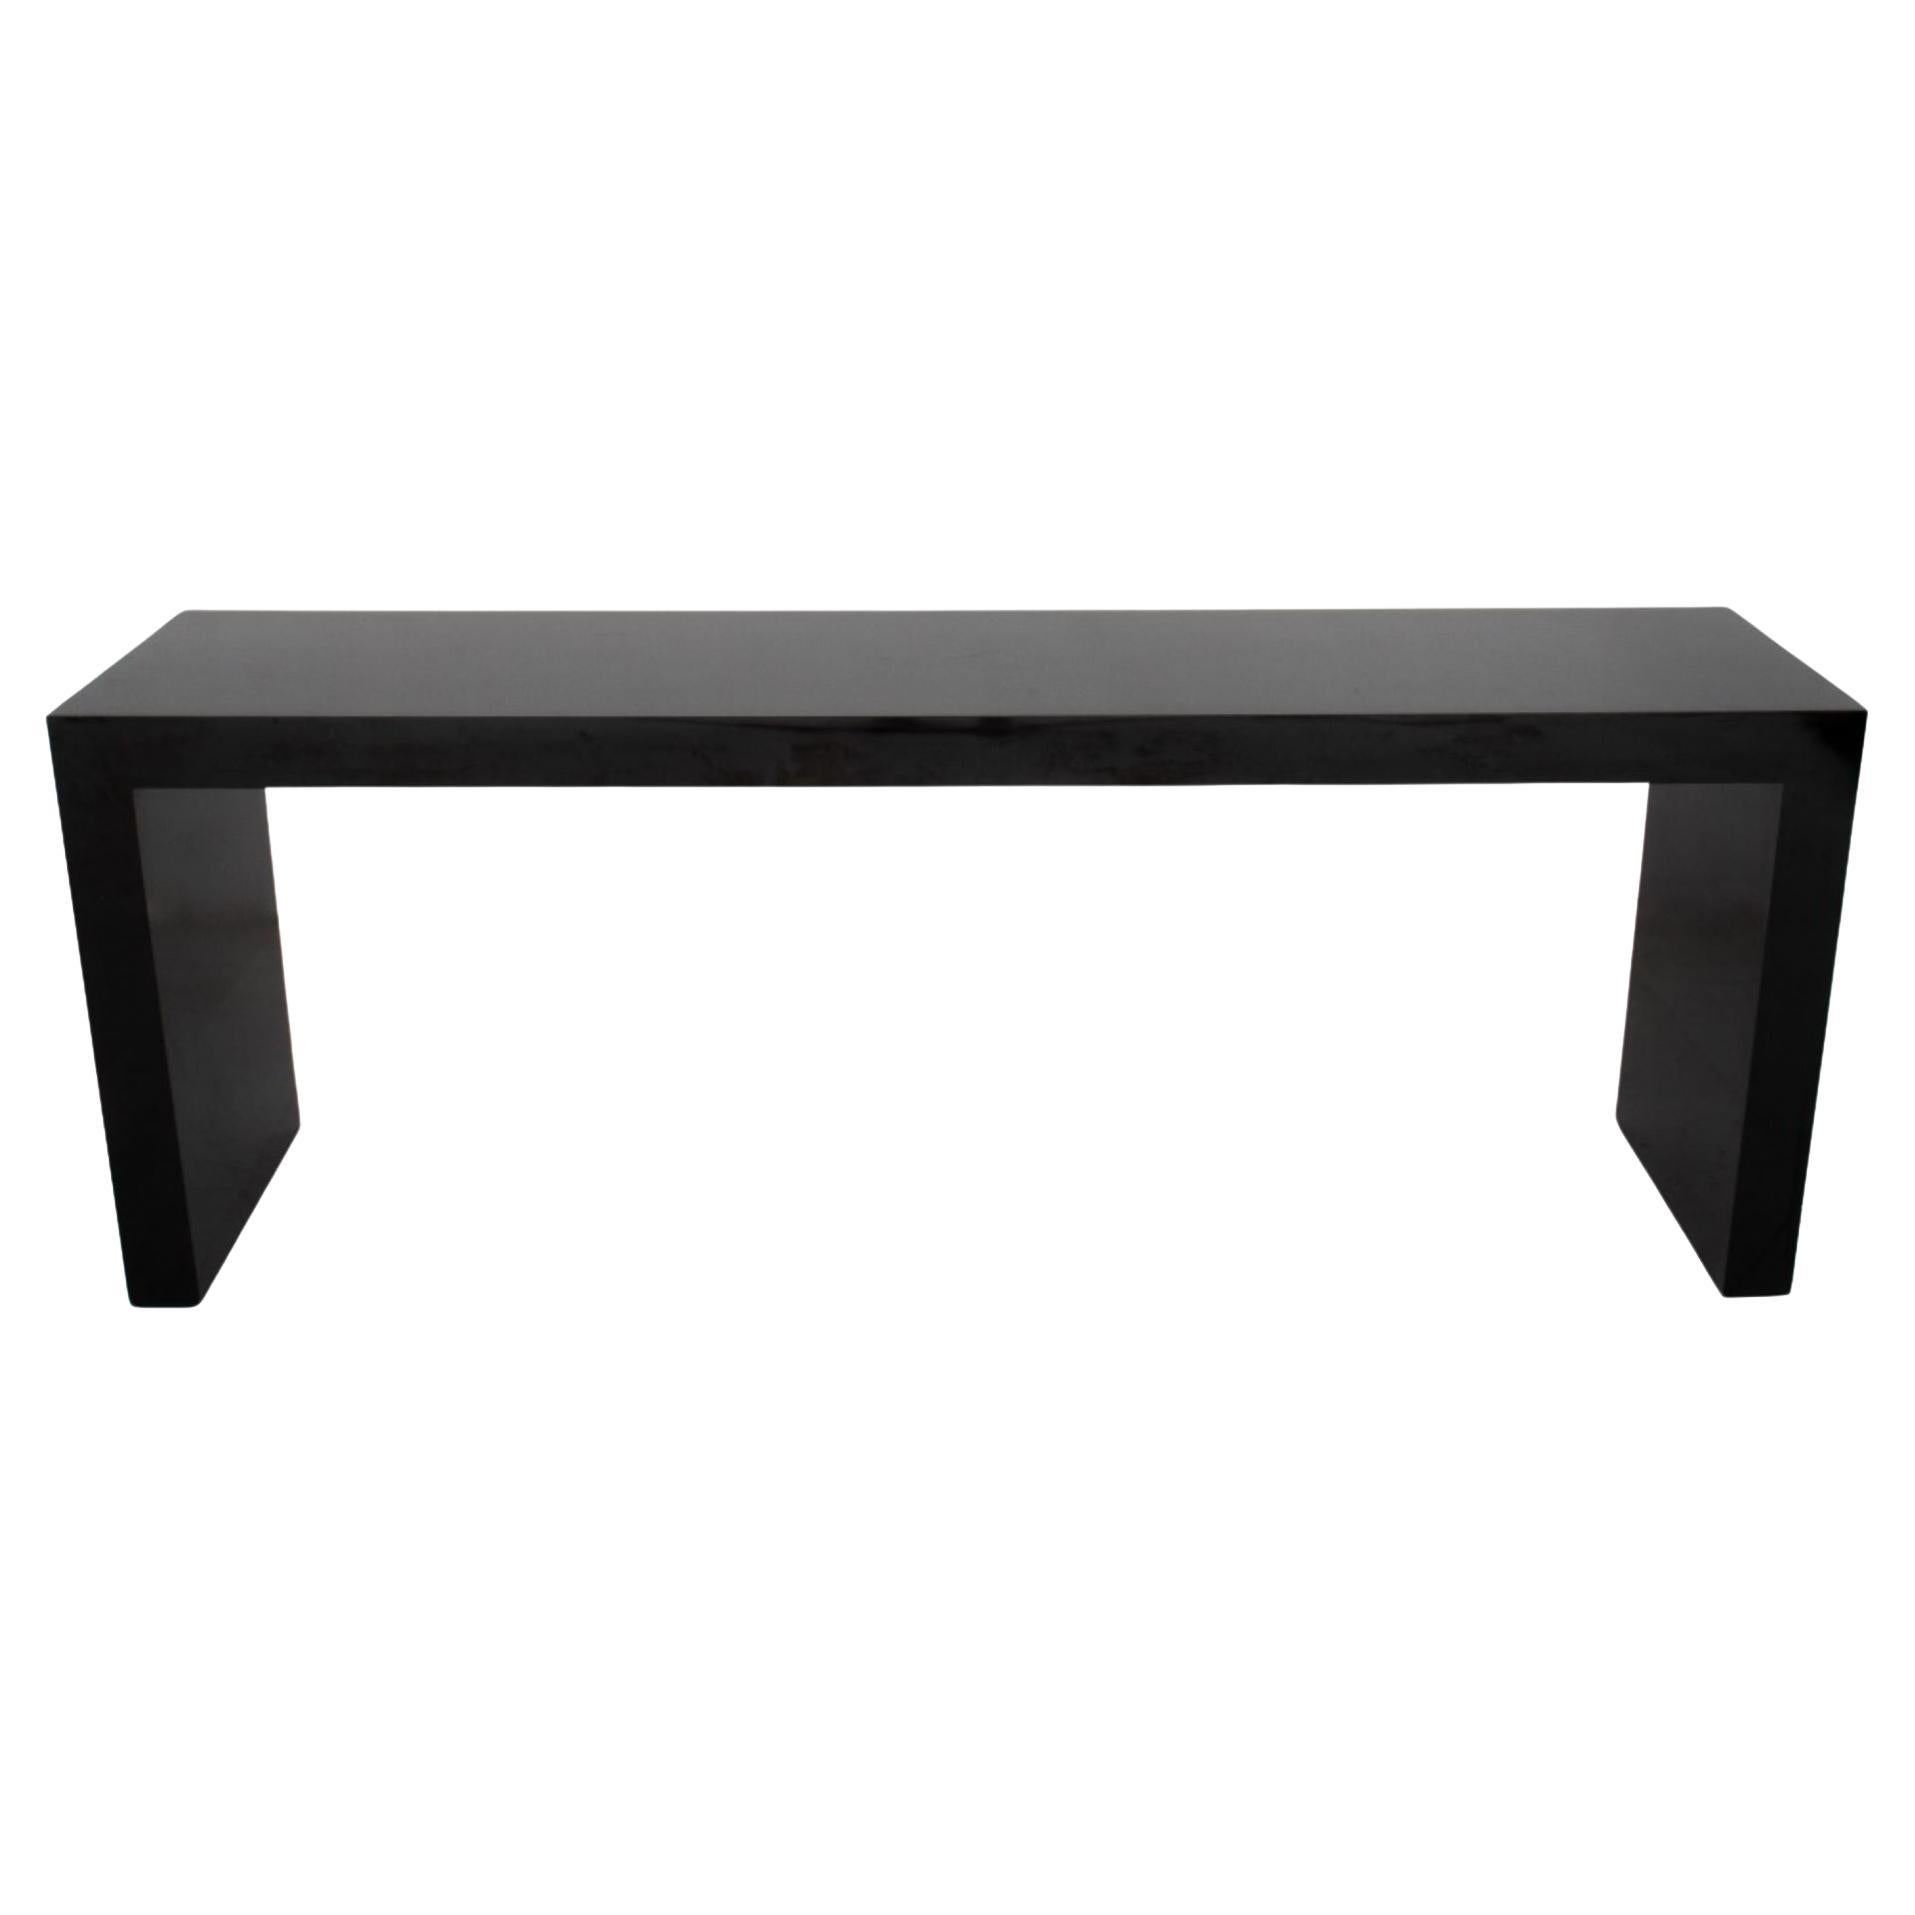 Table console minimaliste en laque noire en vente